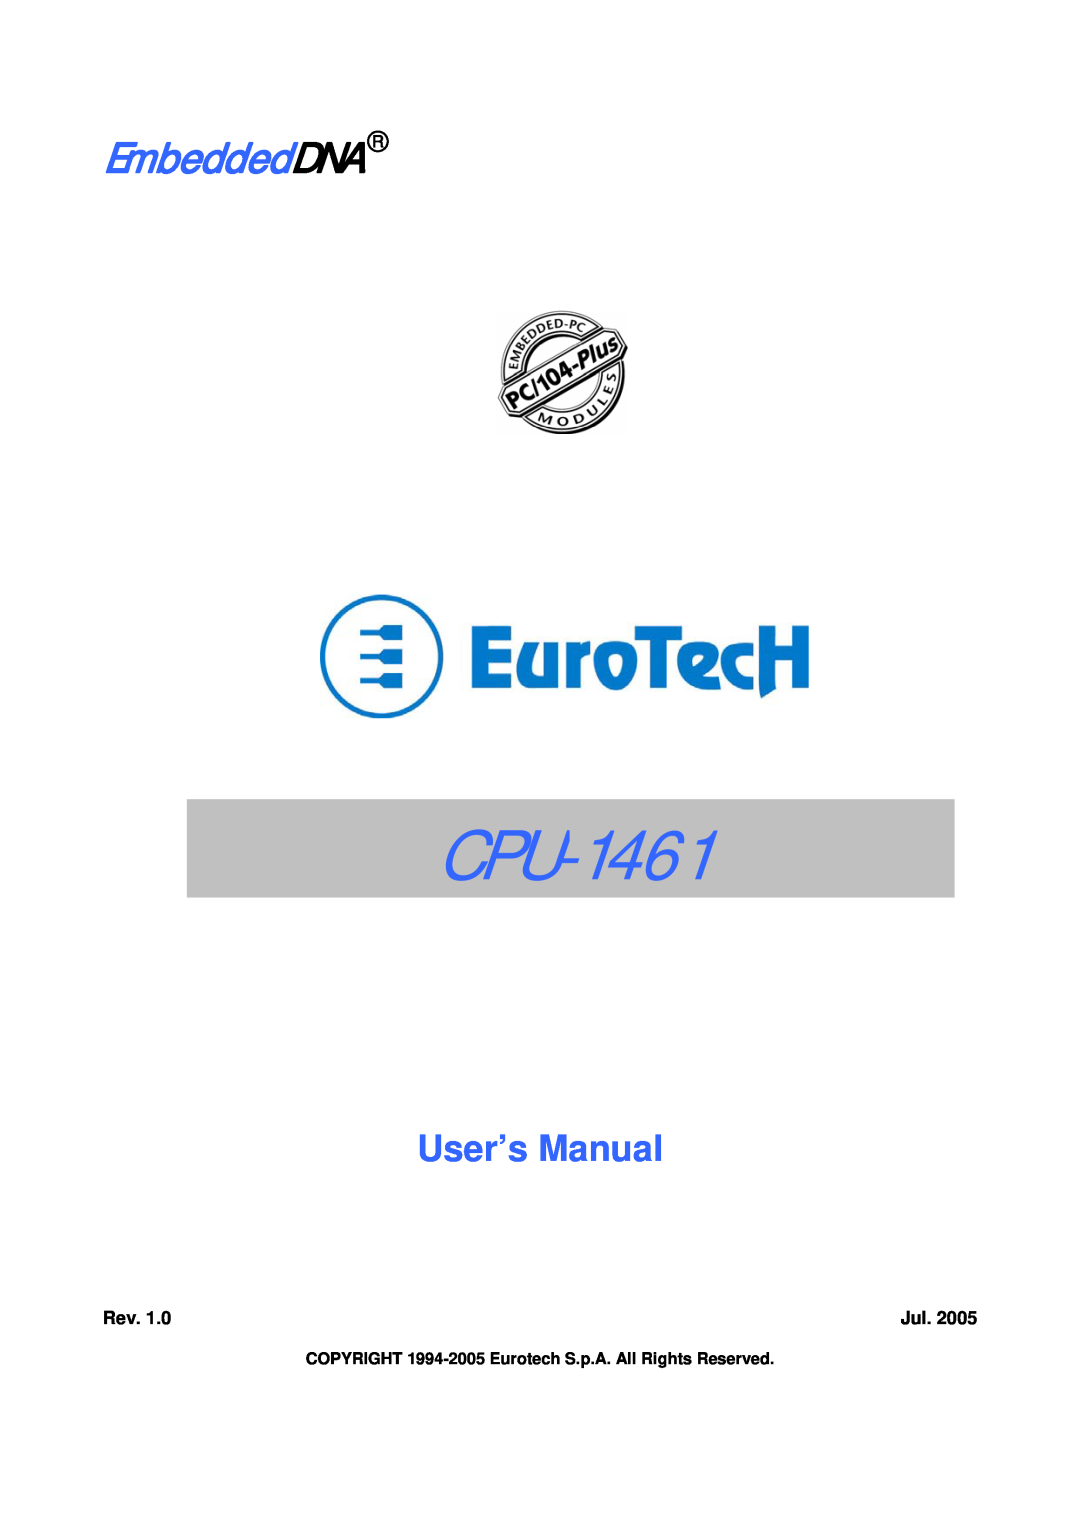 Eurotech Appliances CPU-1461 user manual EmbeddedDNA, User’s Manual 